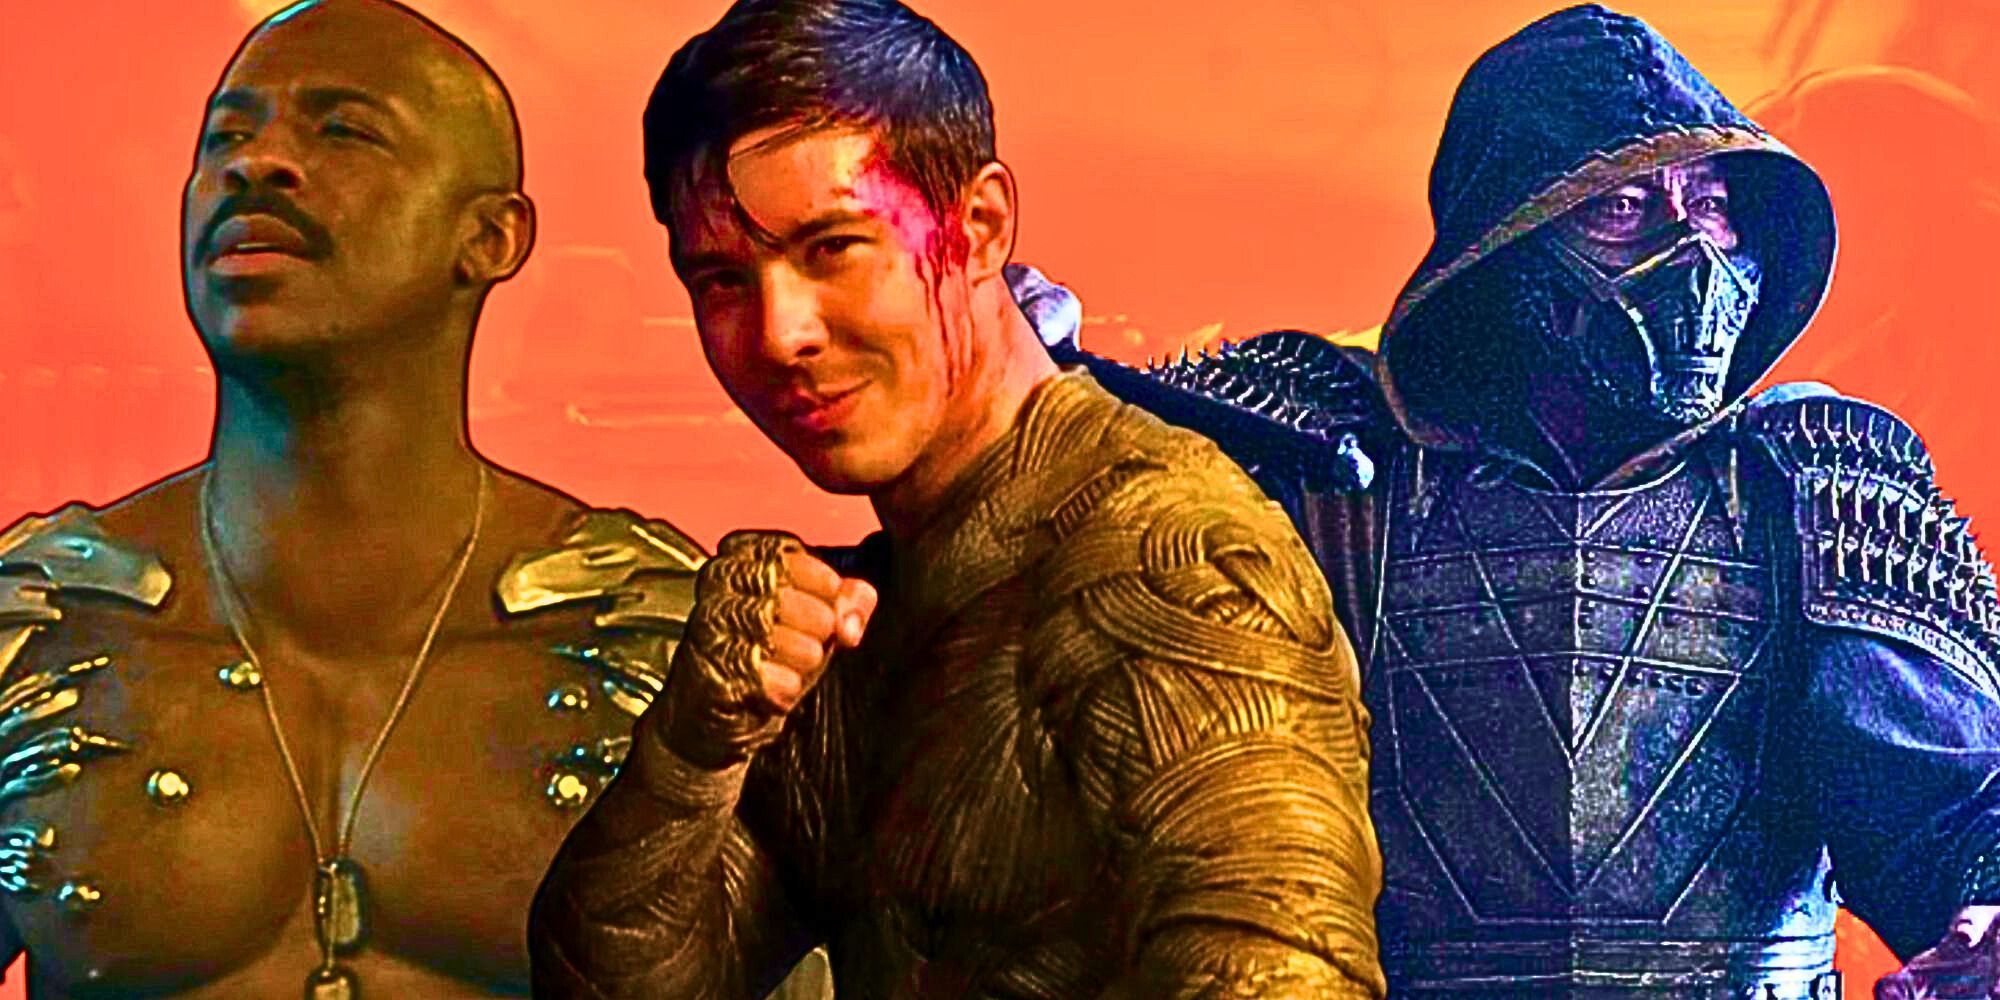 A custom image of Jax, Cole, and Scorpion from 2021's Mortal Kombat movie